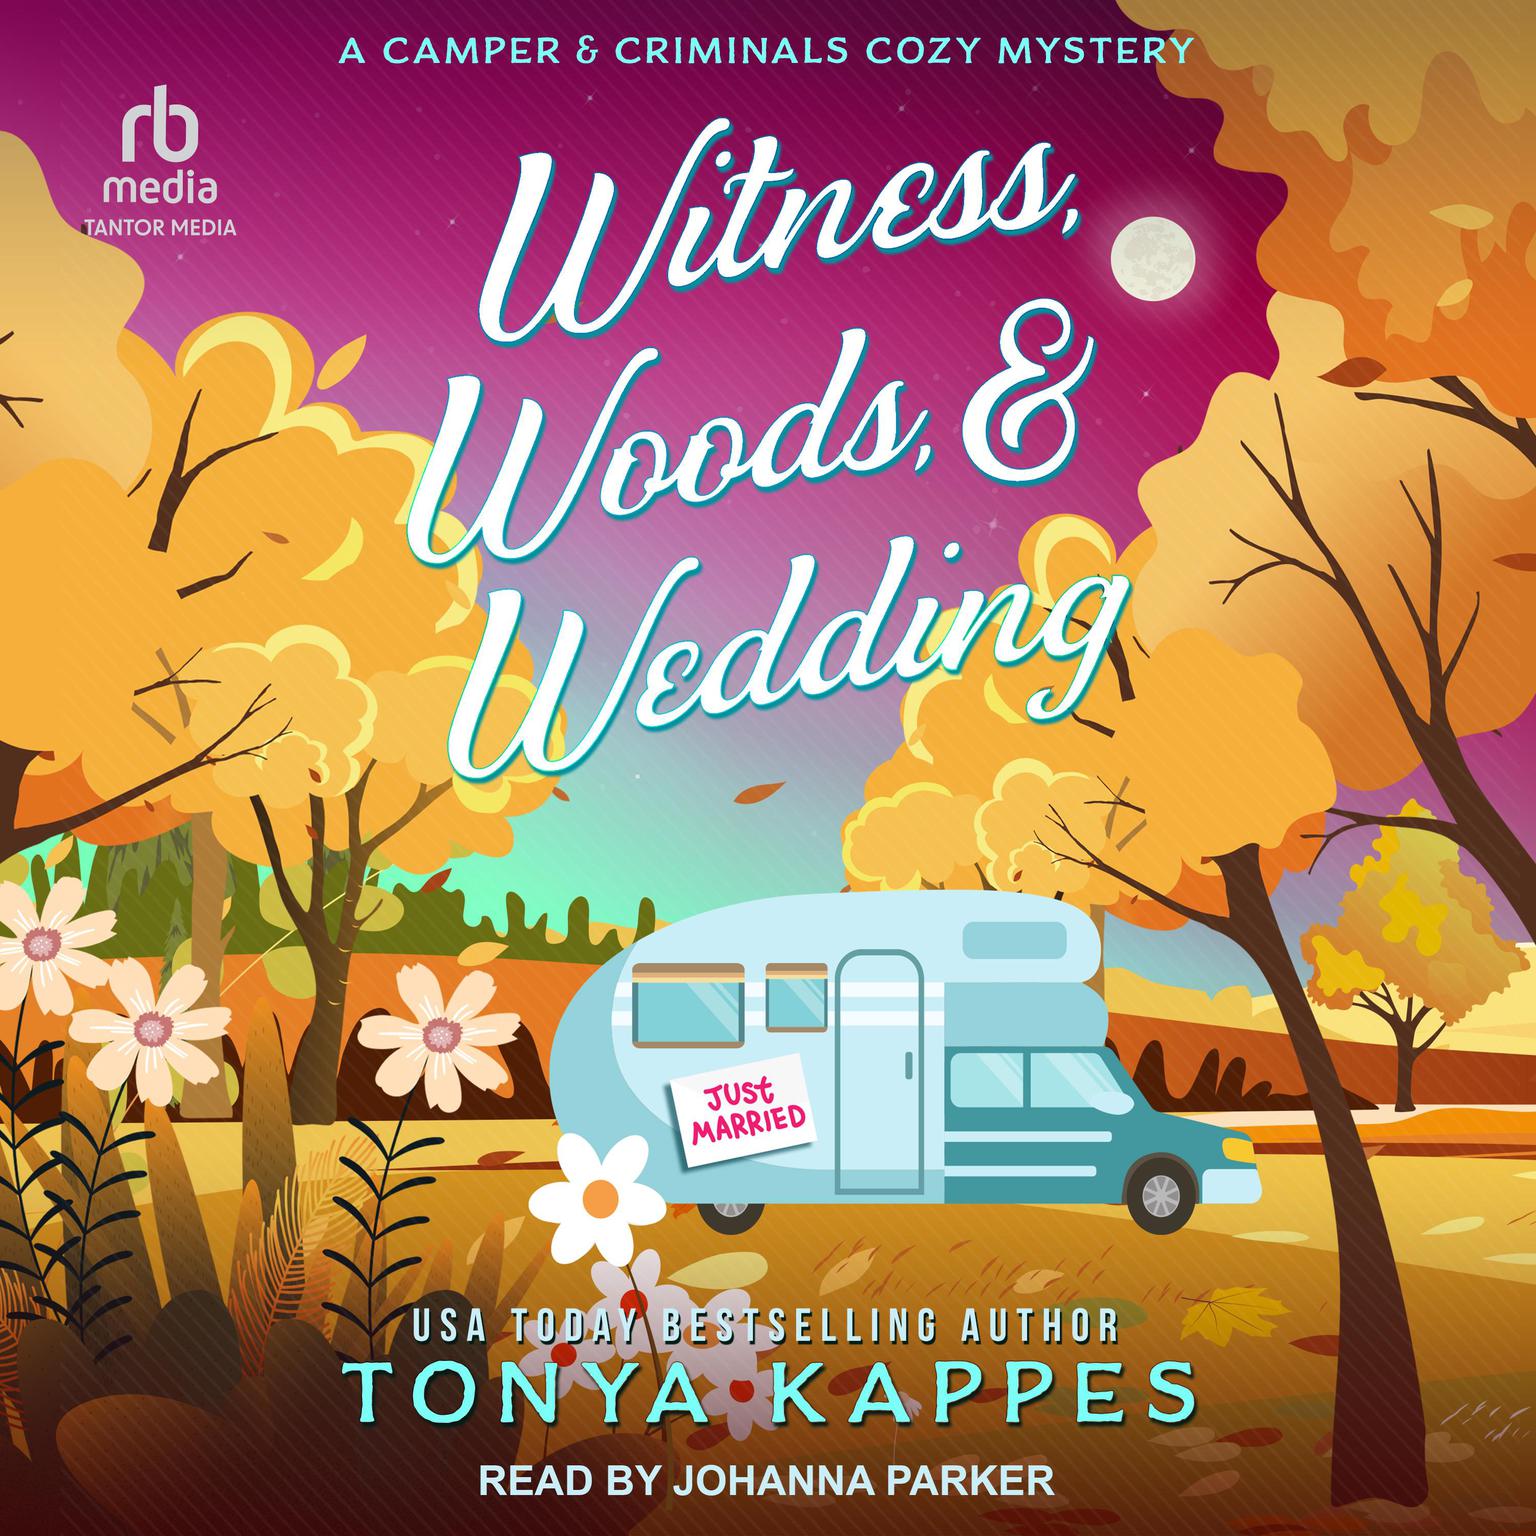 Witness, Woods, & Wedding Audiobook, by Tonya Kappes